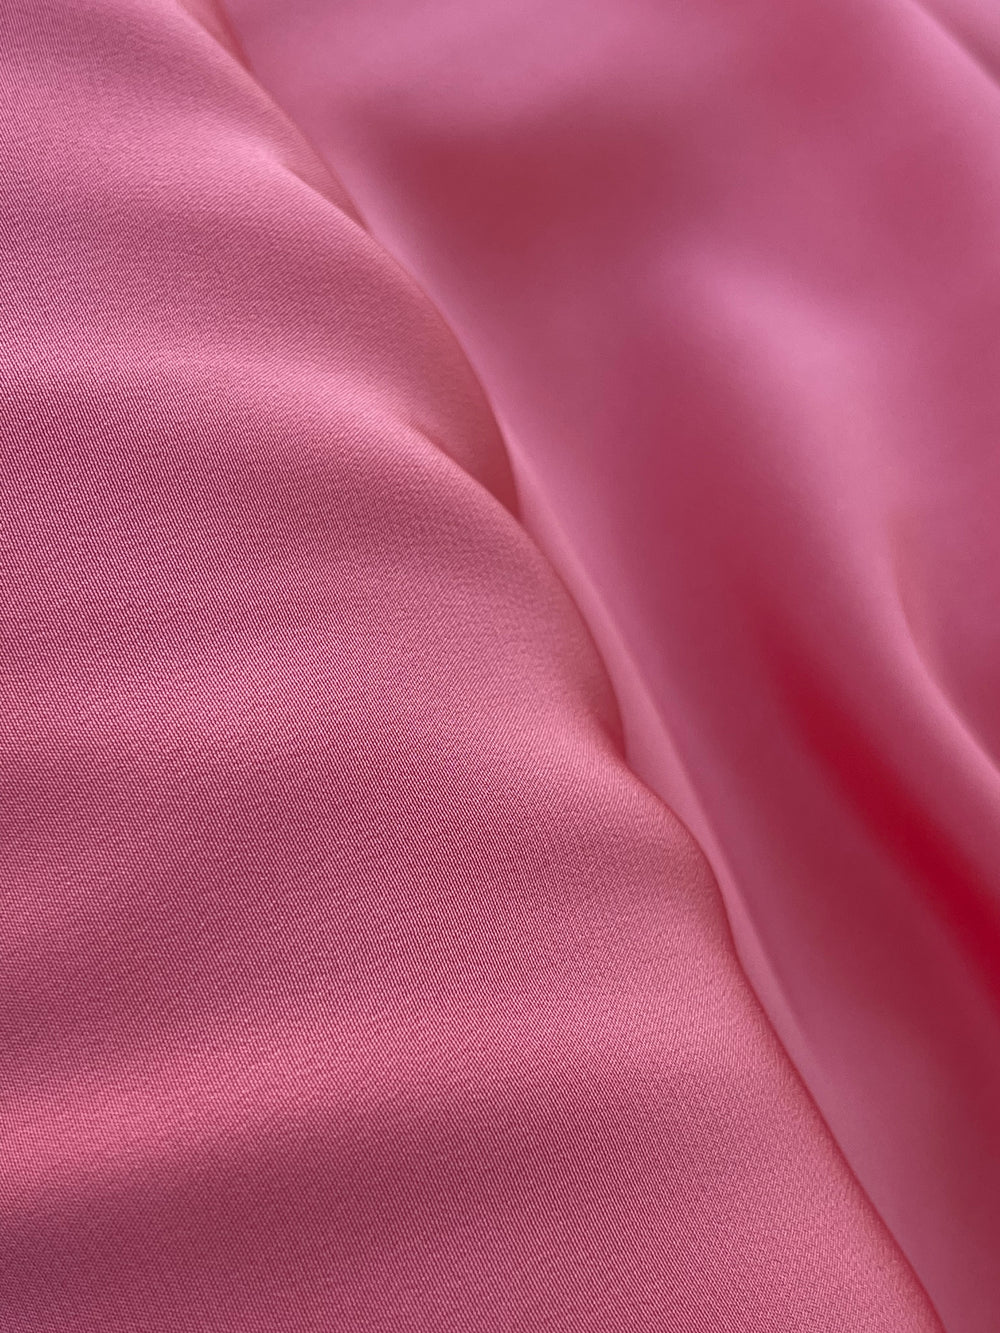 Silk Crepe Fabric | Silk Crepe De Chine Fabric | MONSARFABRICS